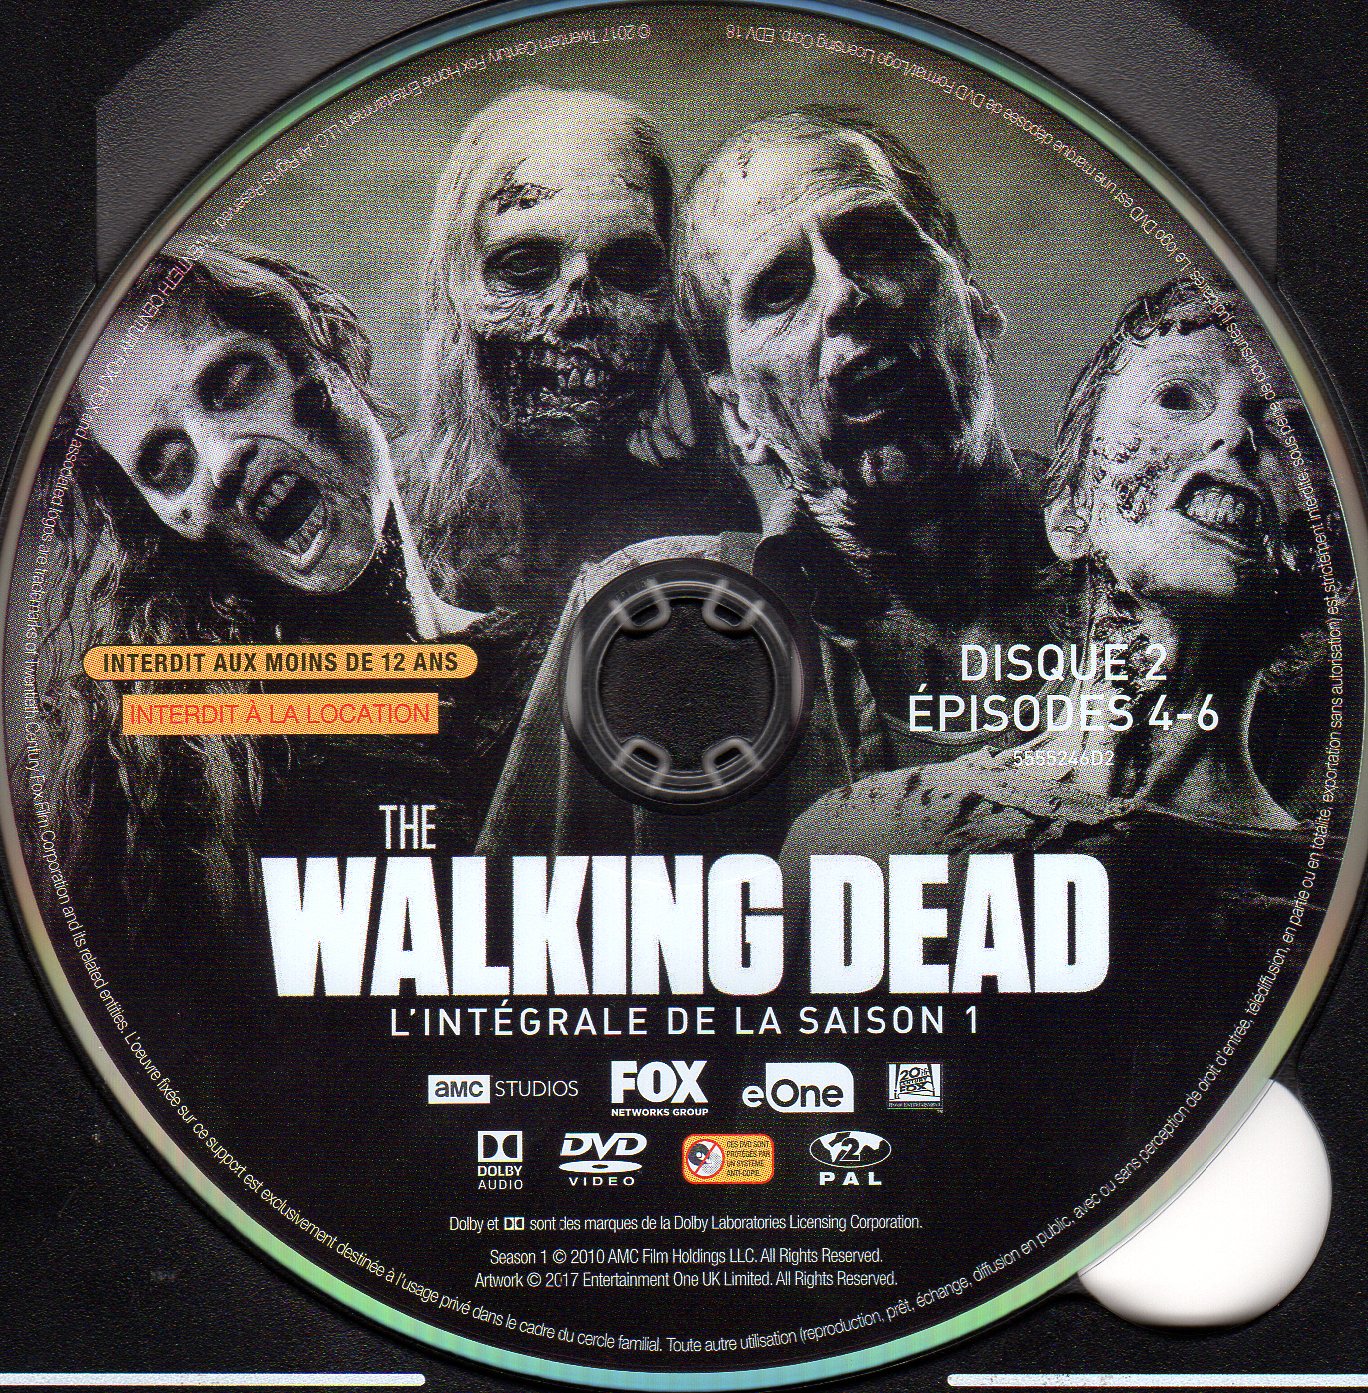 The walking dead saison 1 DISC 2